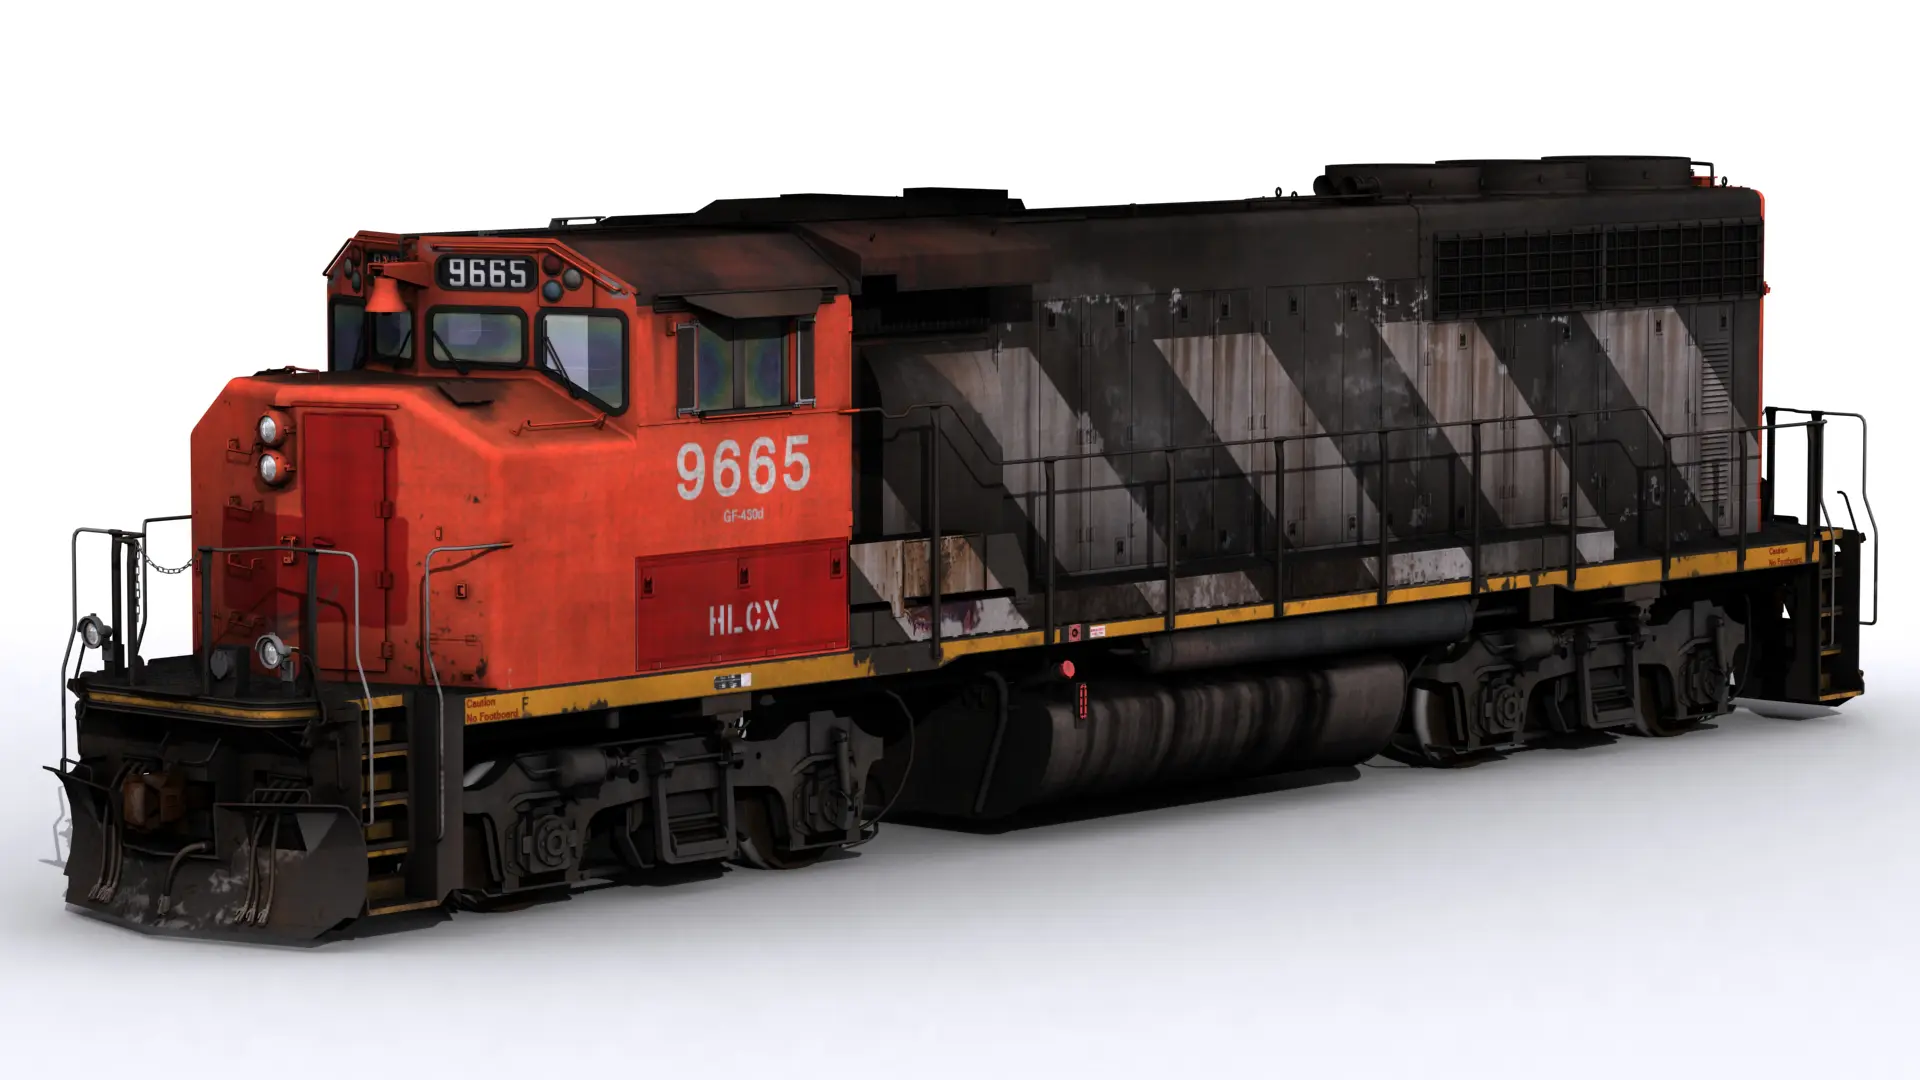 orange and black engine 9665